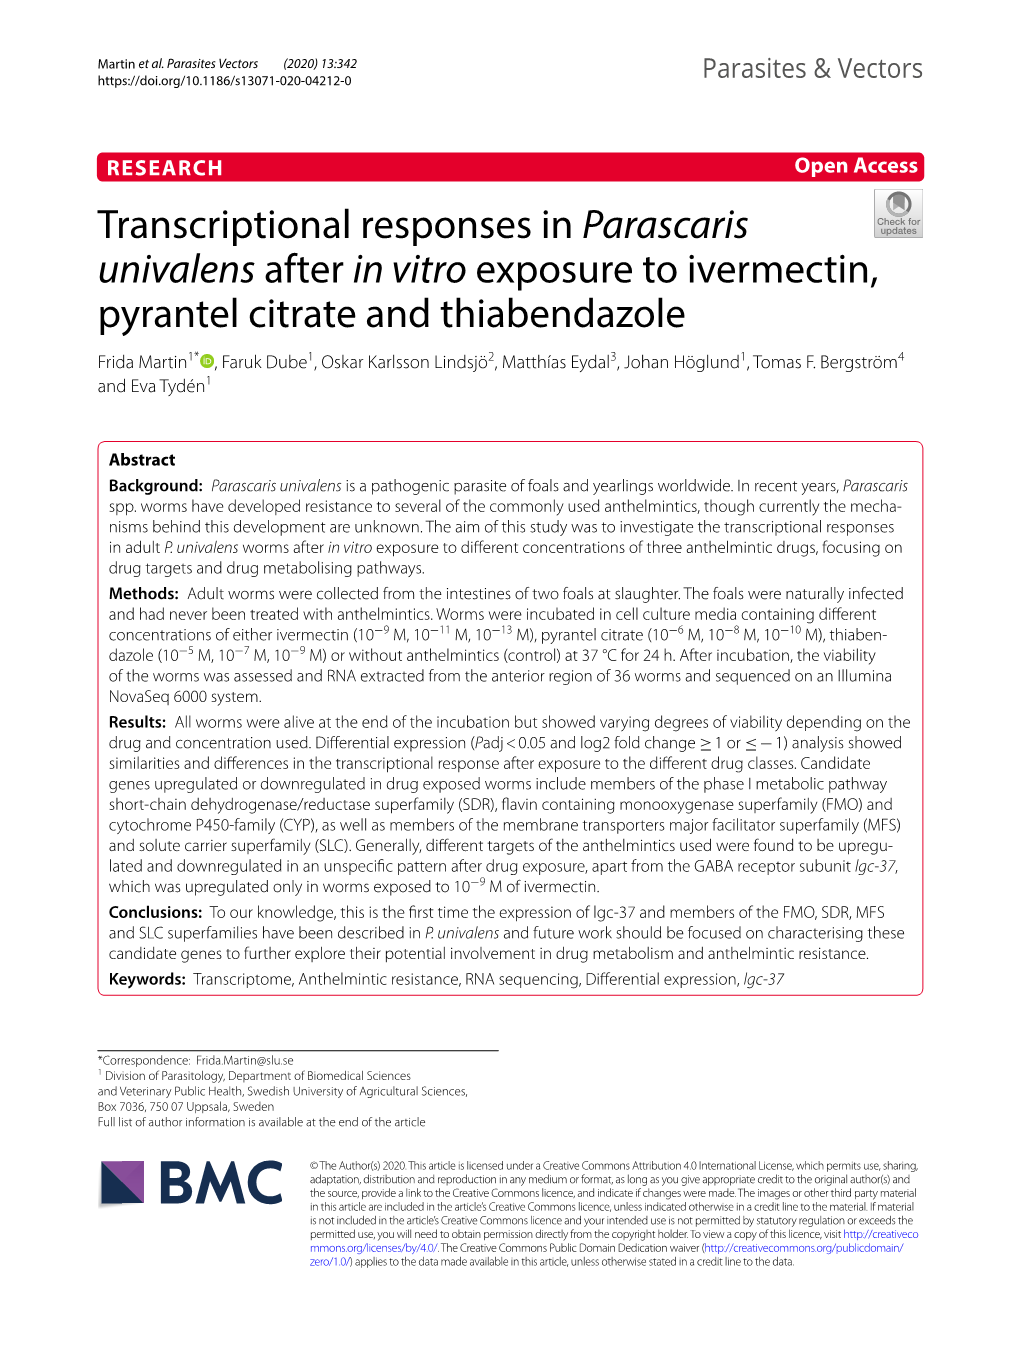 Transcriptional Responses in Parascaris